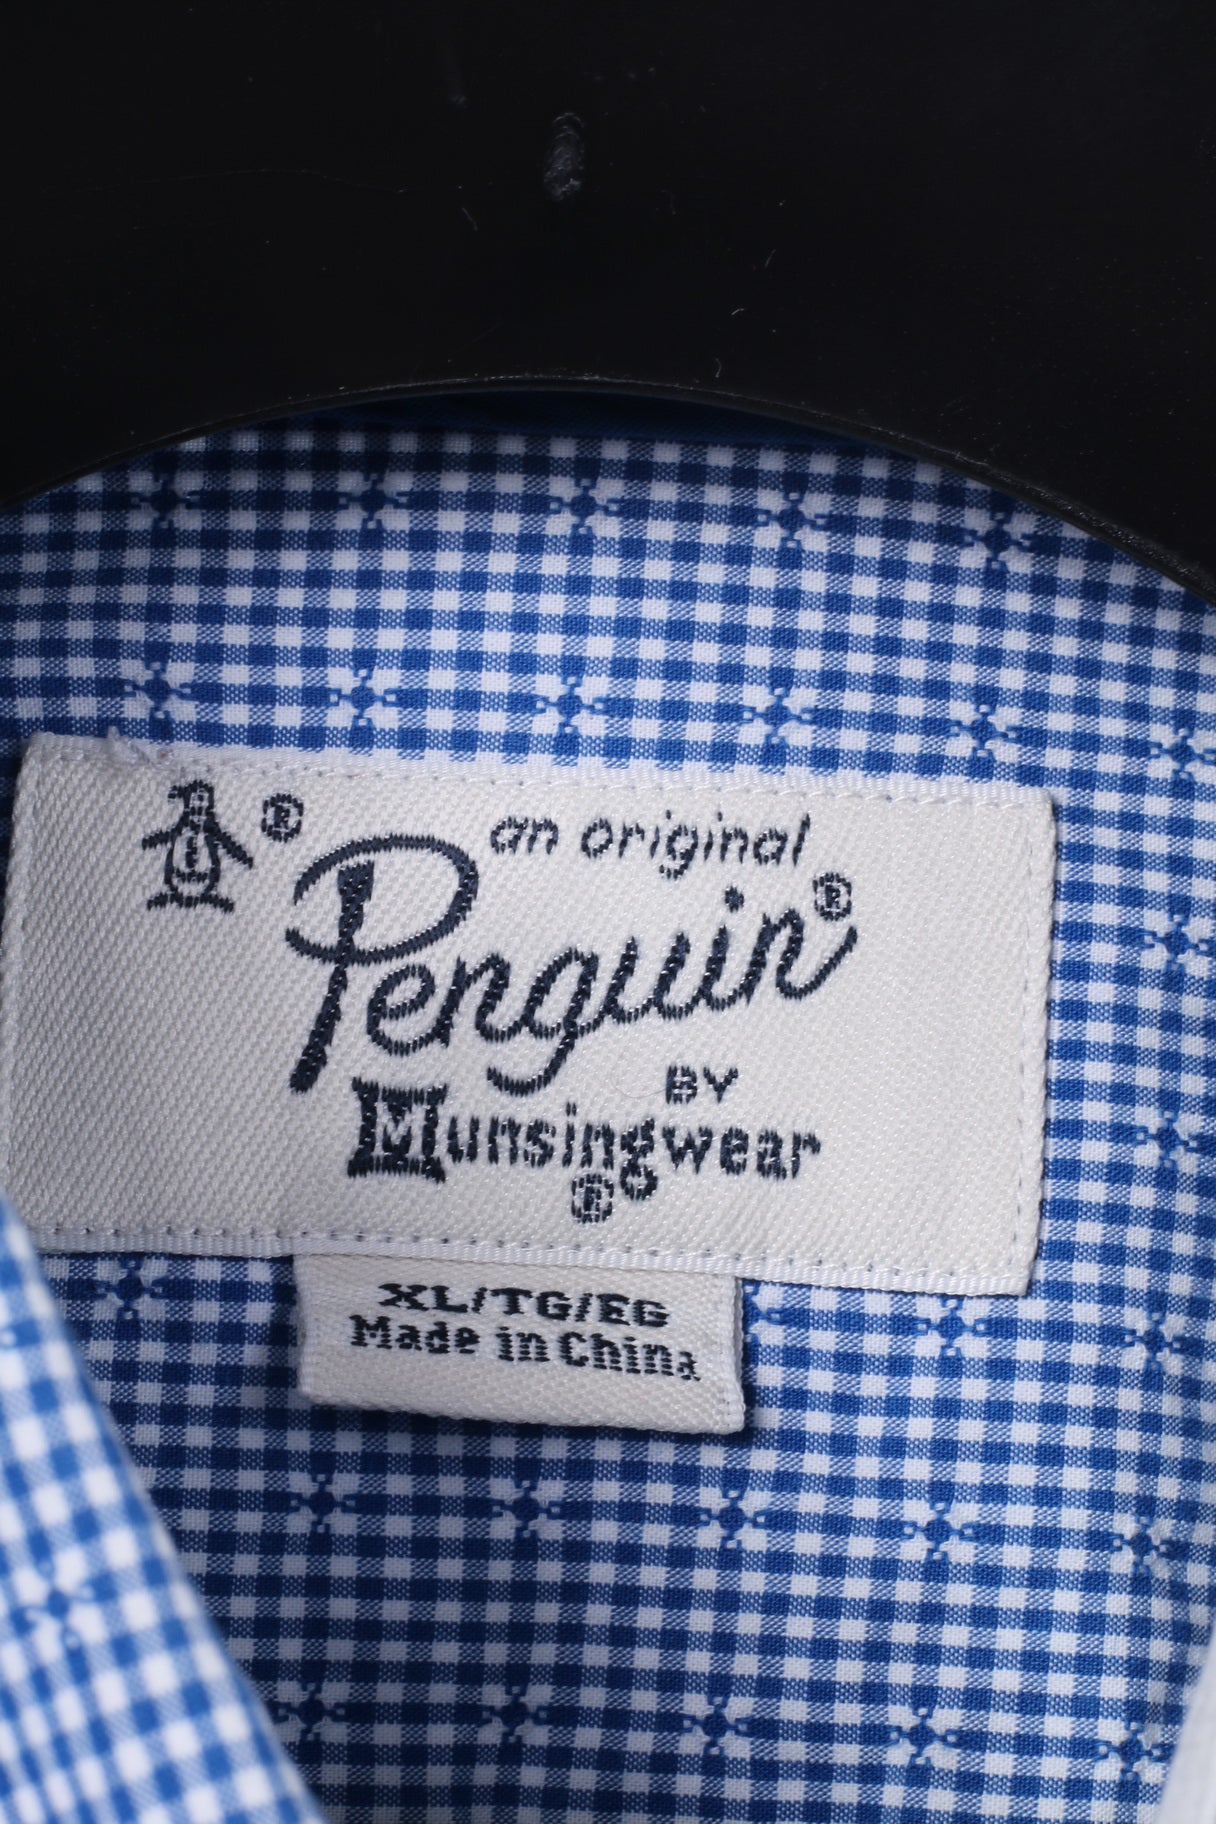 Penguin Mens XL Casual Shirt Mini Check Blue Cotton Heritage Slim Fit Top